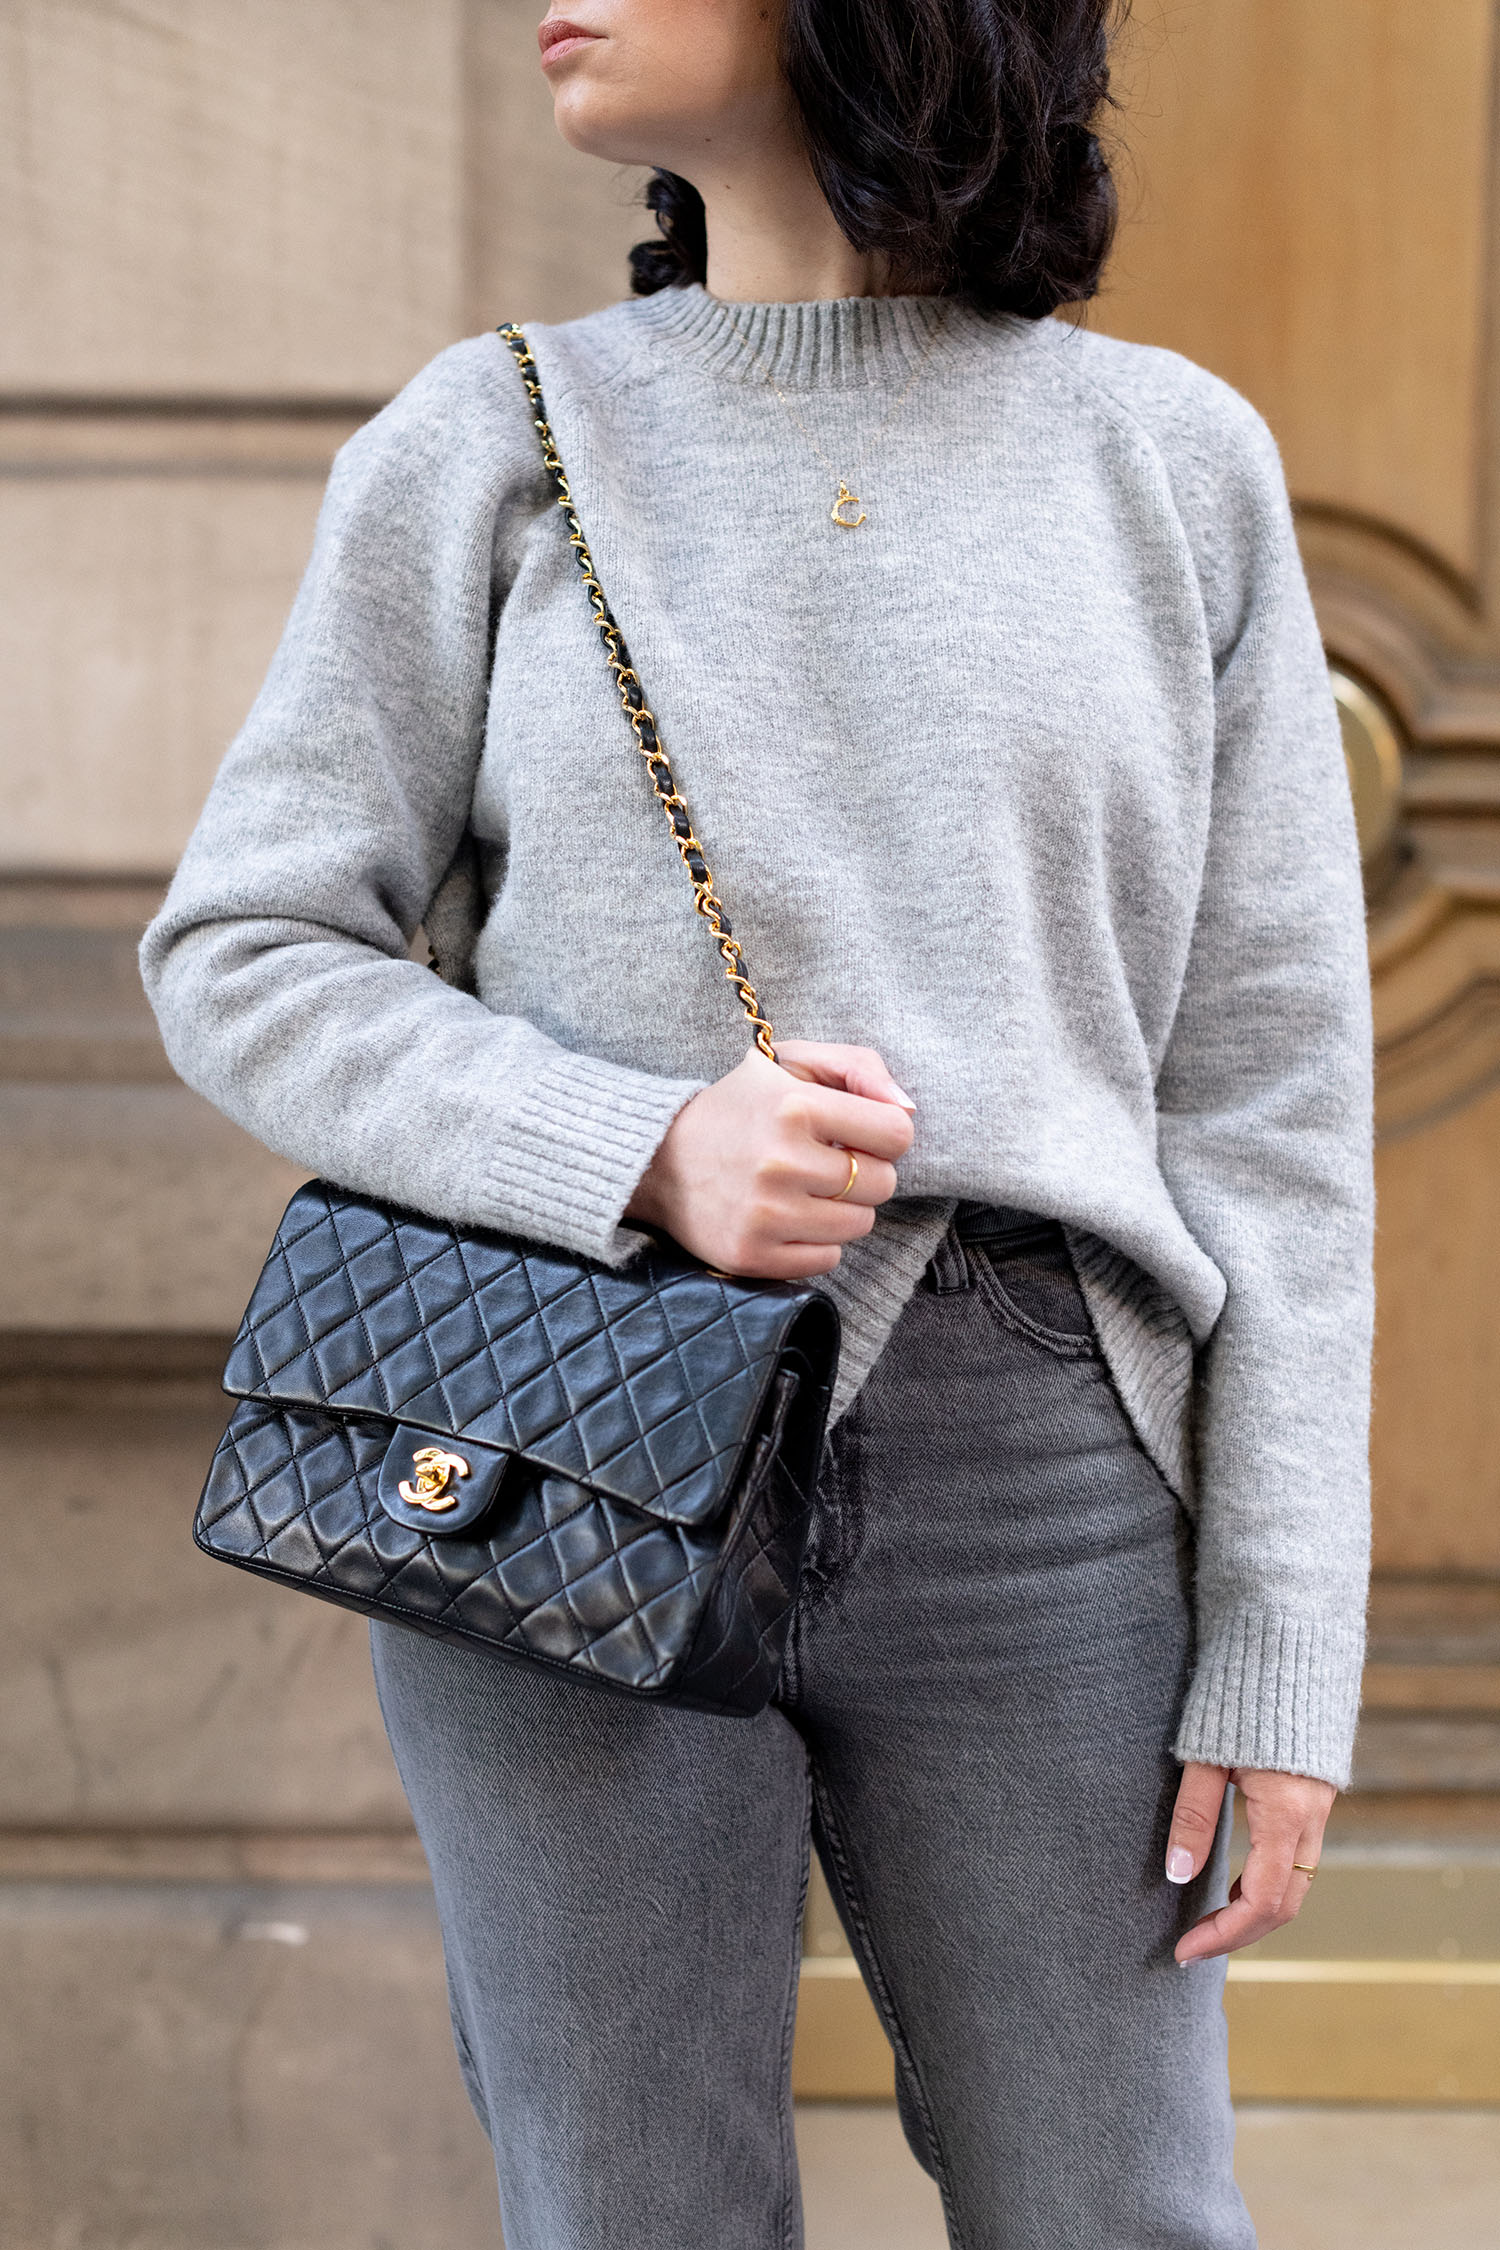 Coco & Voltaire - Chanel small double flap handbag, Celine necklace, Mango sweater